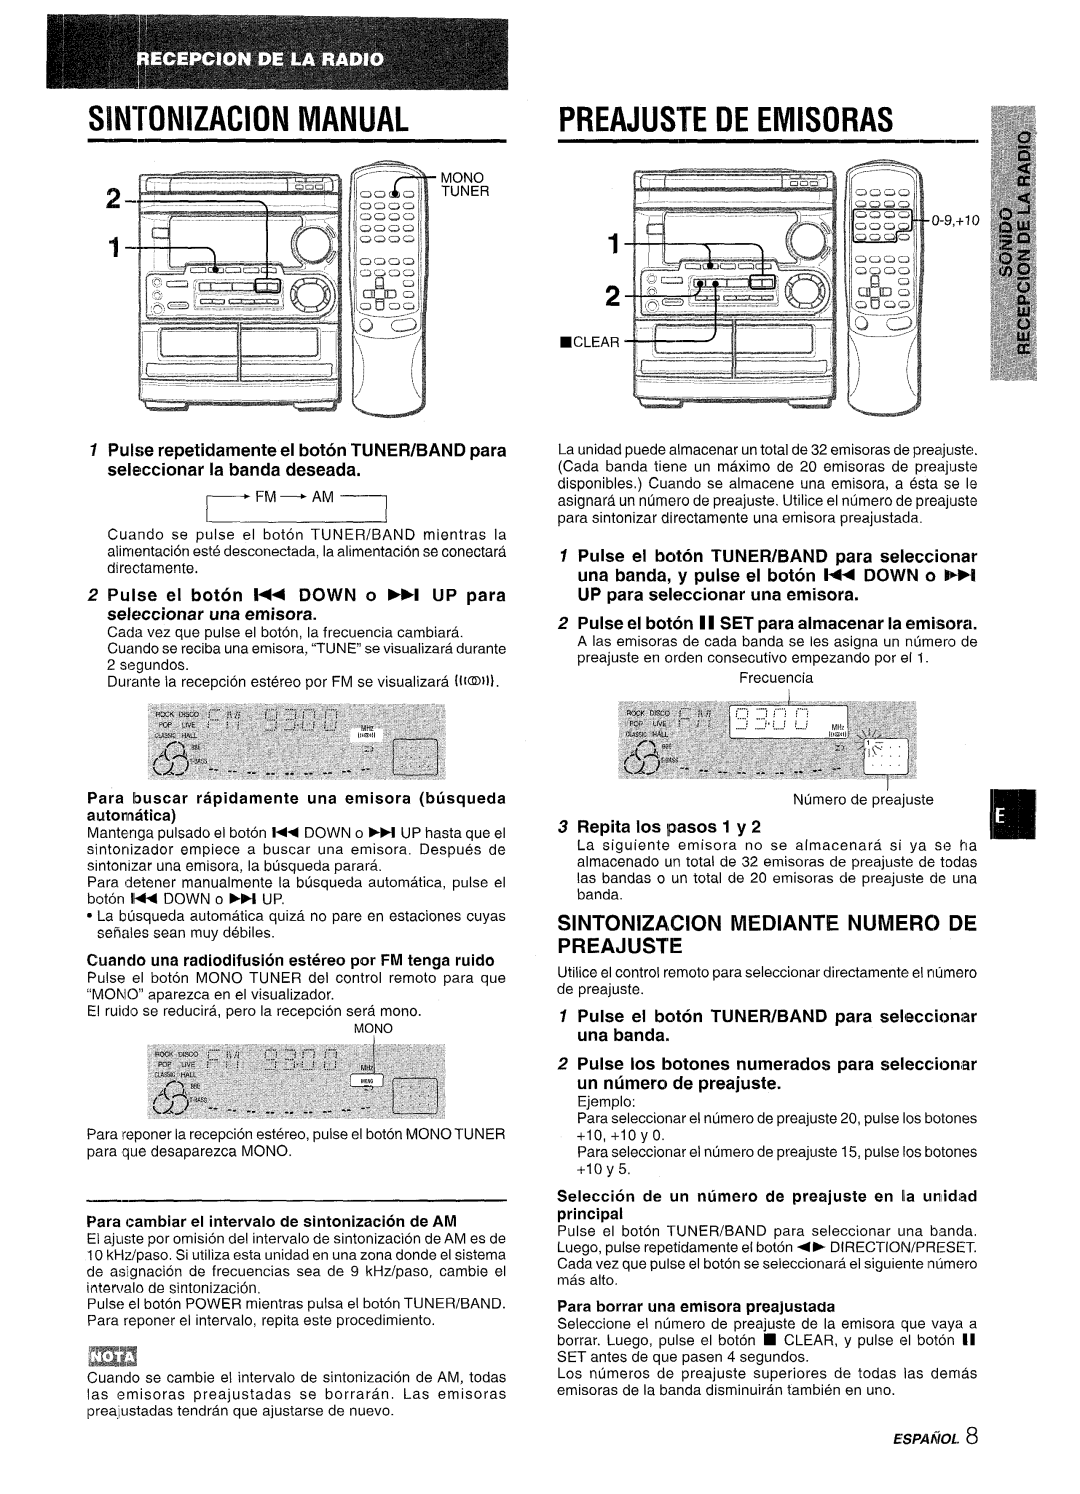 Aiwa CX-NMT50 manual Sintonizacion Manual, Preajuste De Emisoras, Sintonizacion Mediante Numerc De Preajuste 